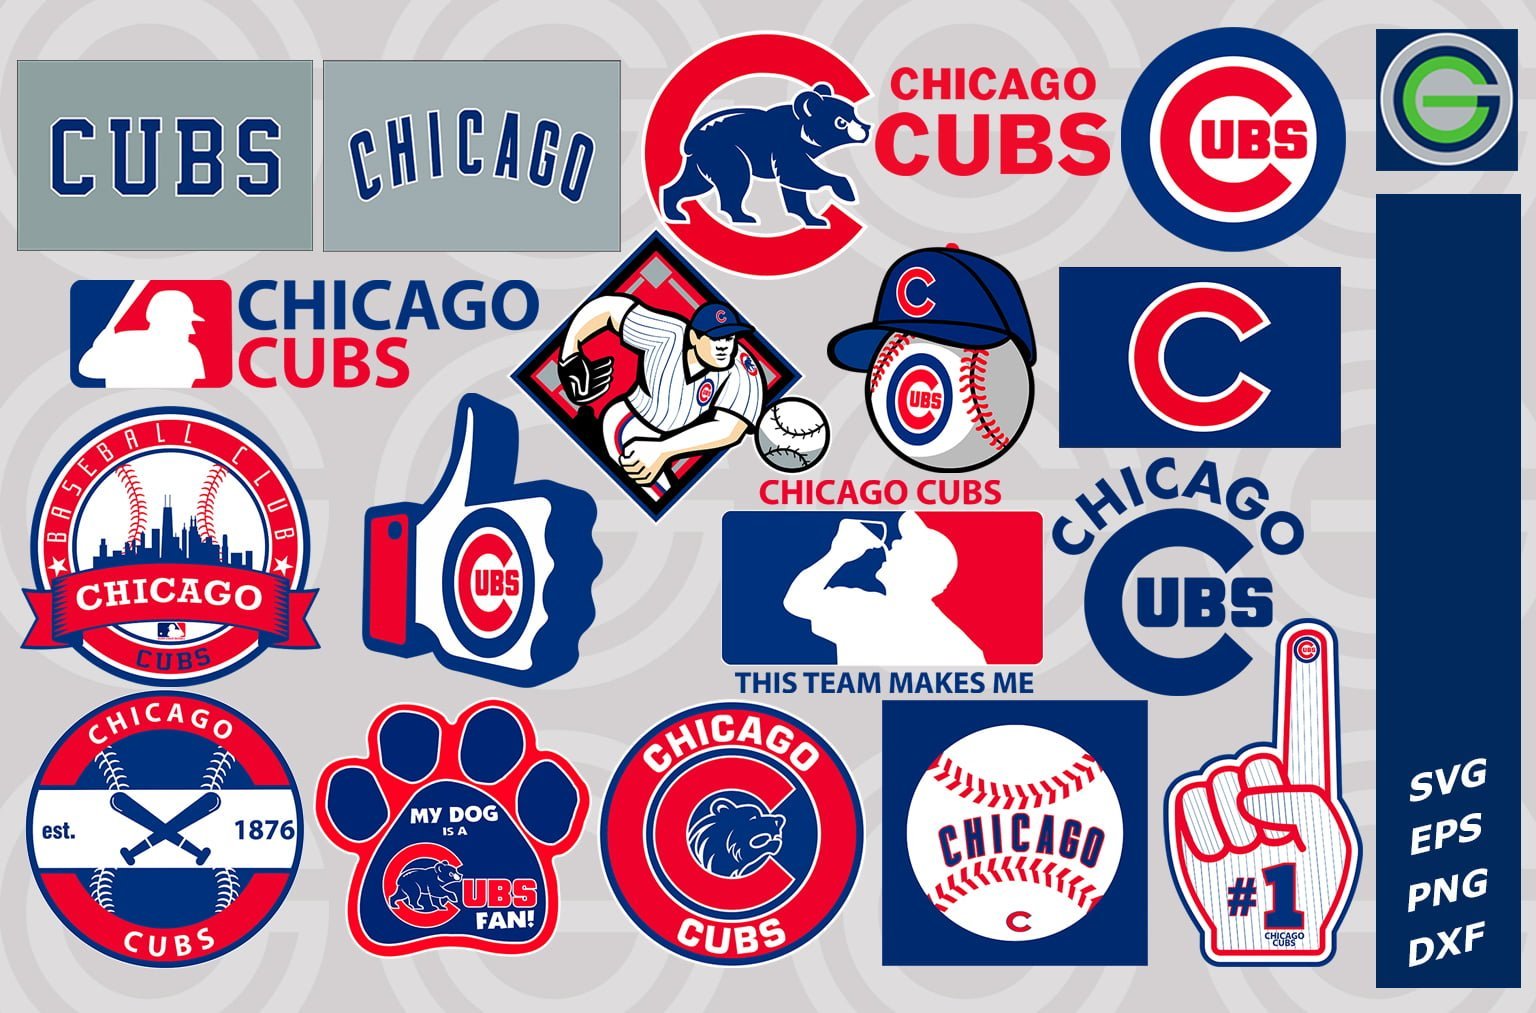 Chicago Cubs Baseball Set Design SVG Files, Cricut, Silhouette Studio,  Digital Cut Files, New Jersey